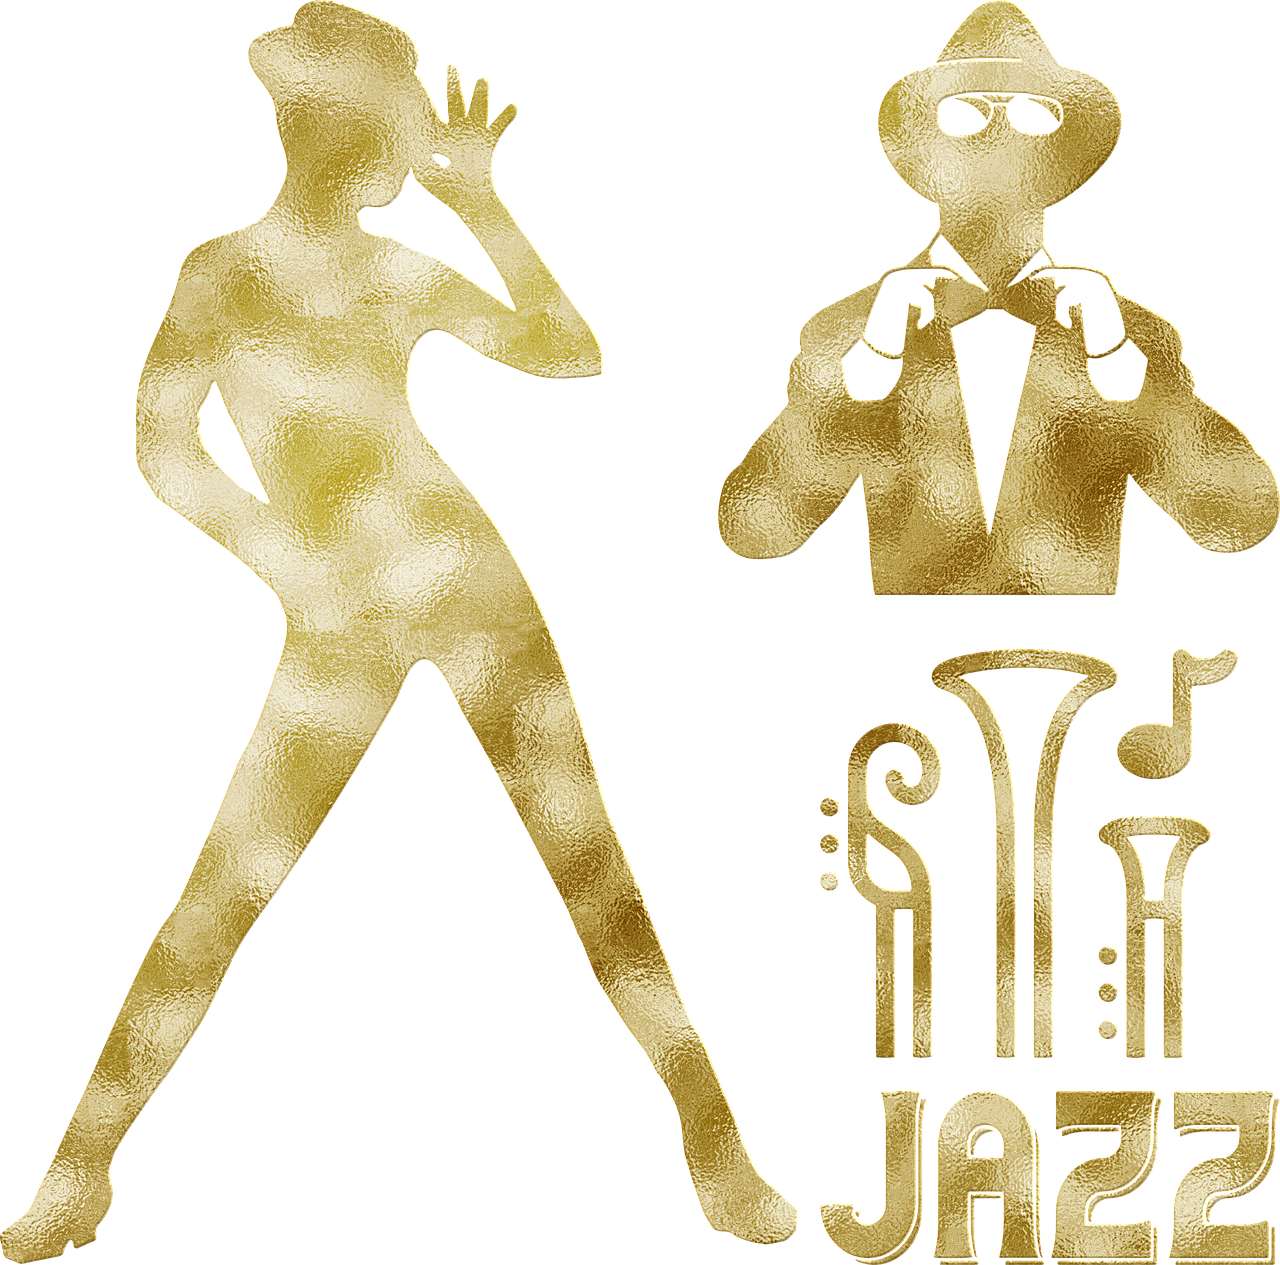 a gold silhouette of a man in a tuxedo and a woman in a tuxedo, concept art, by Zoran Mušič, trending on pixabay, harlem renaissance, 3 jazz musicians, sculpture made of gold, retro haze, logo”